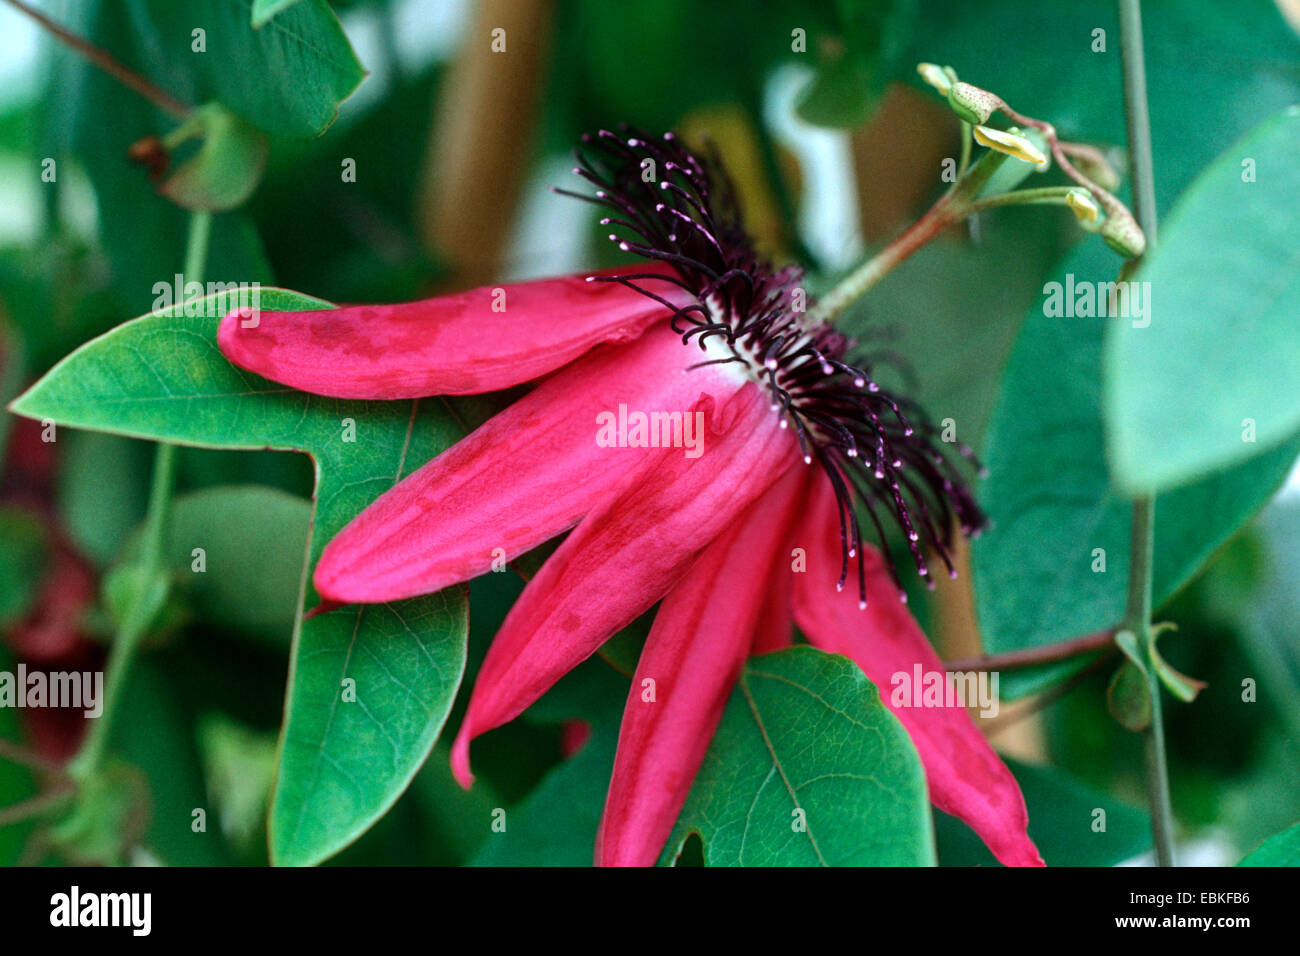 passion flower (Passiflora 'Pura Vida', Passiflora Pura Vida), cultivar Pura Vida Stock Photo